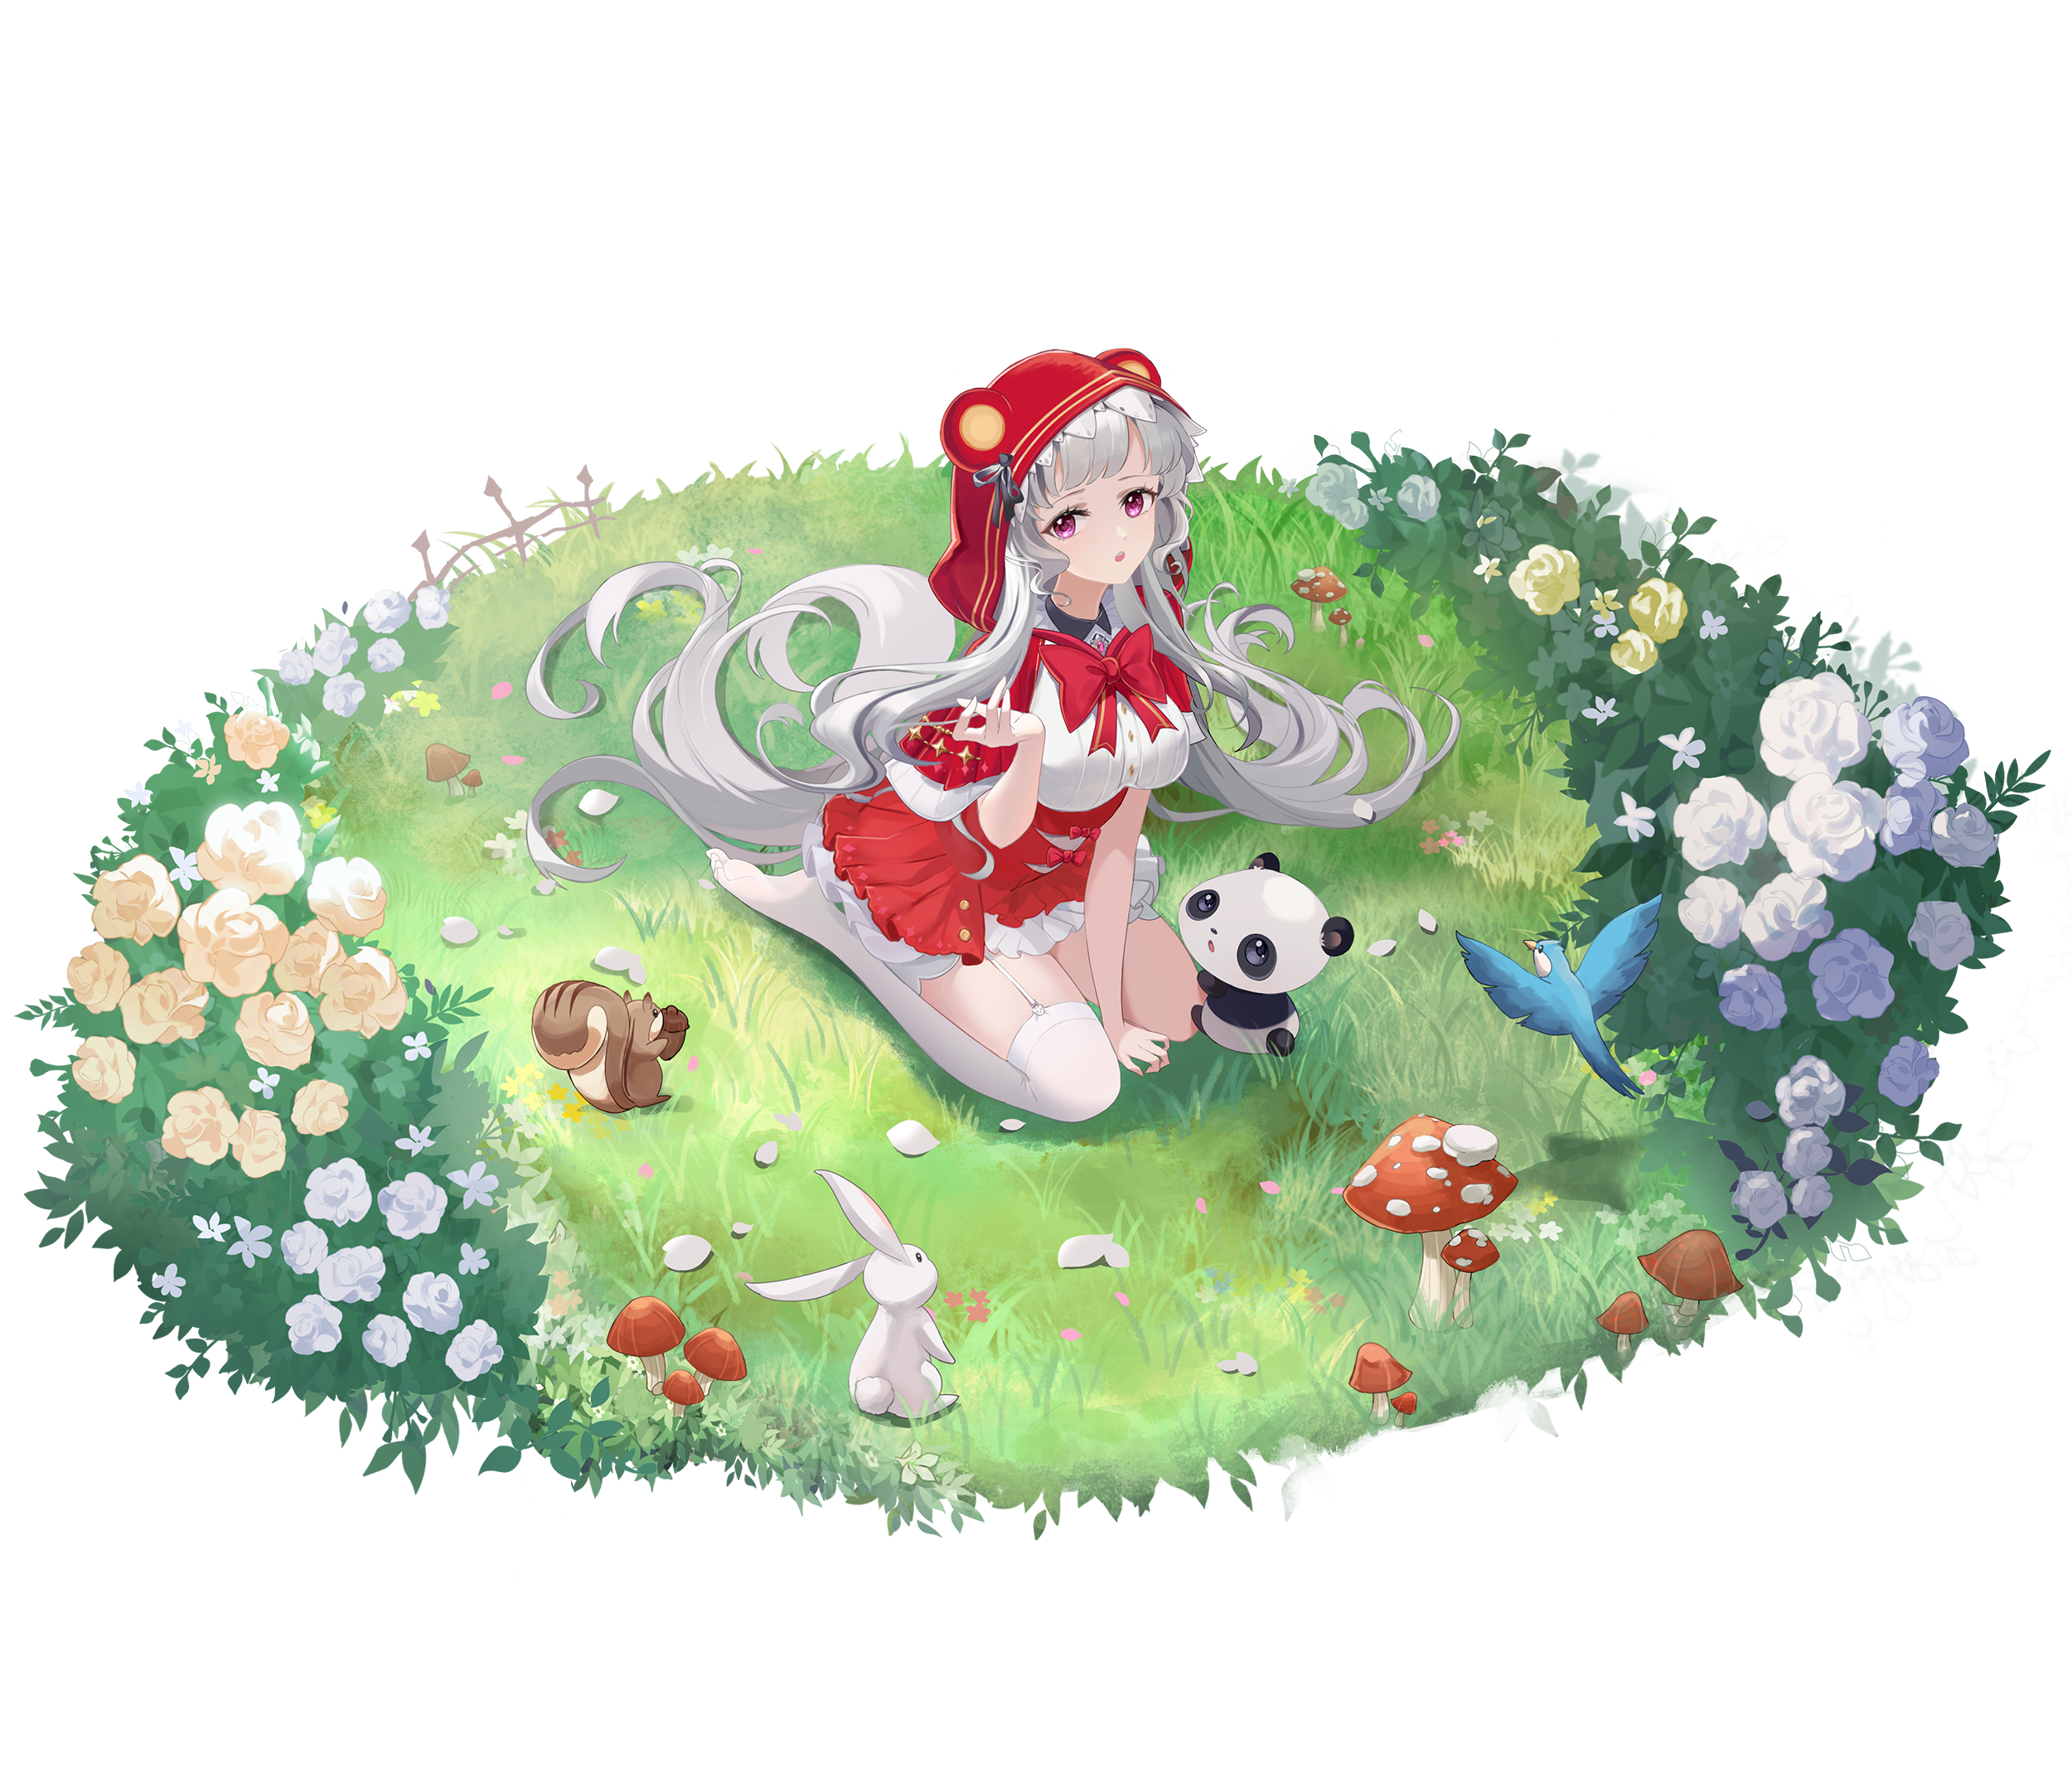 Anime 2500x2150 Aura star panda anime girls red eyes animals squirrel rabbits flowers long hair silver hair stockings mushroom birds